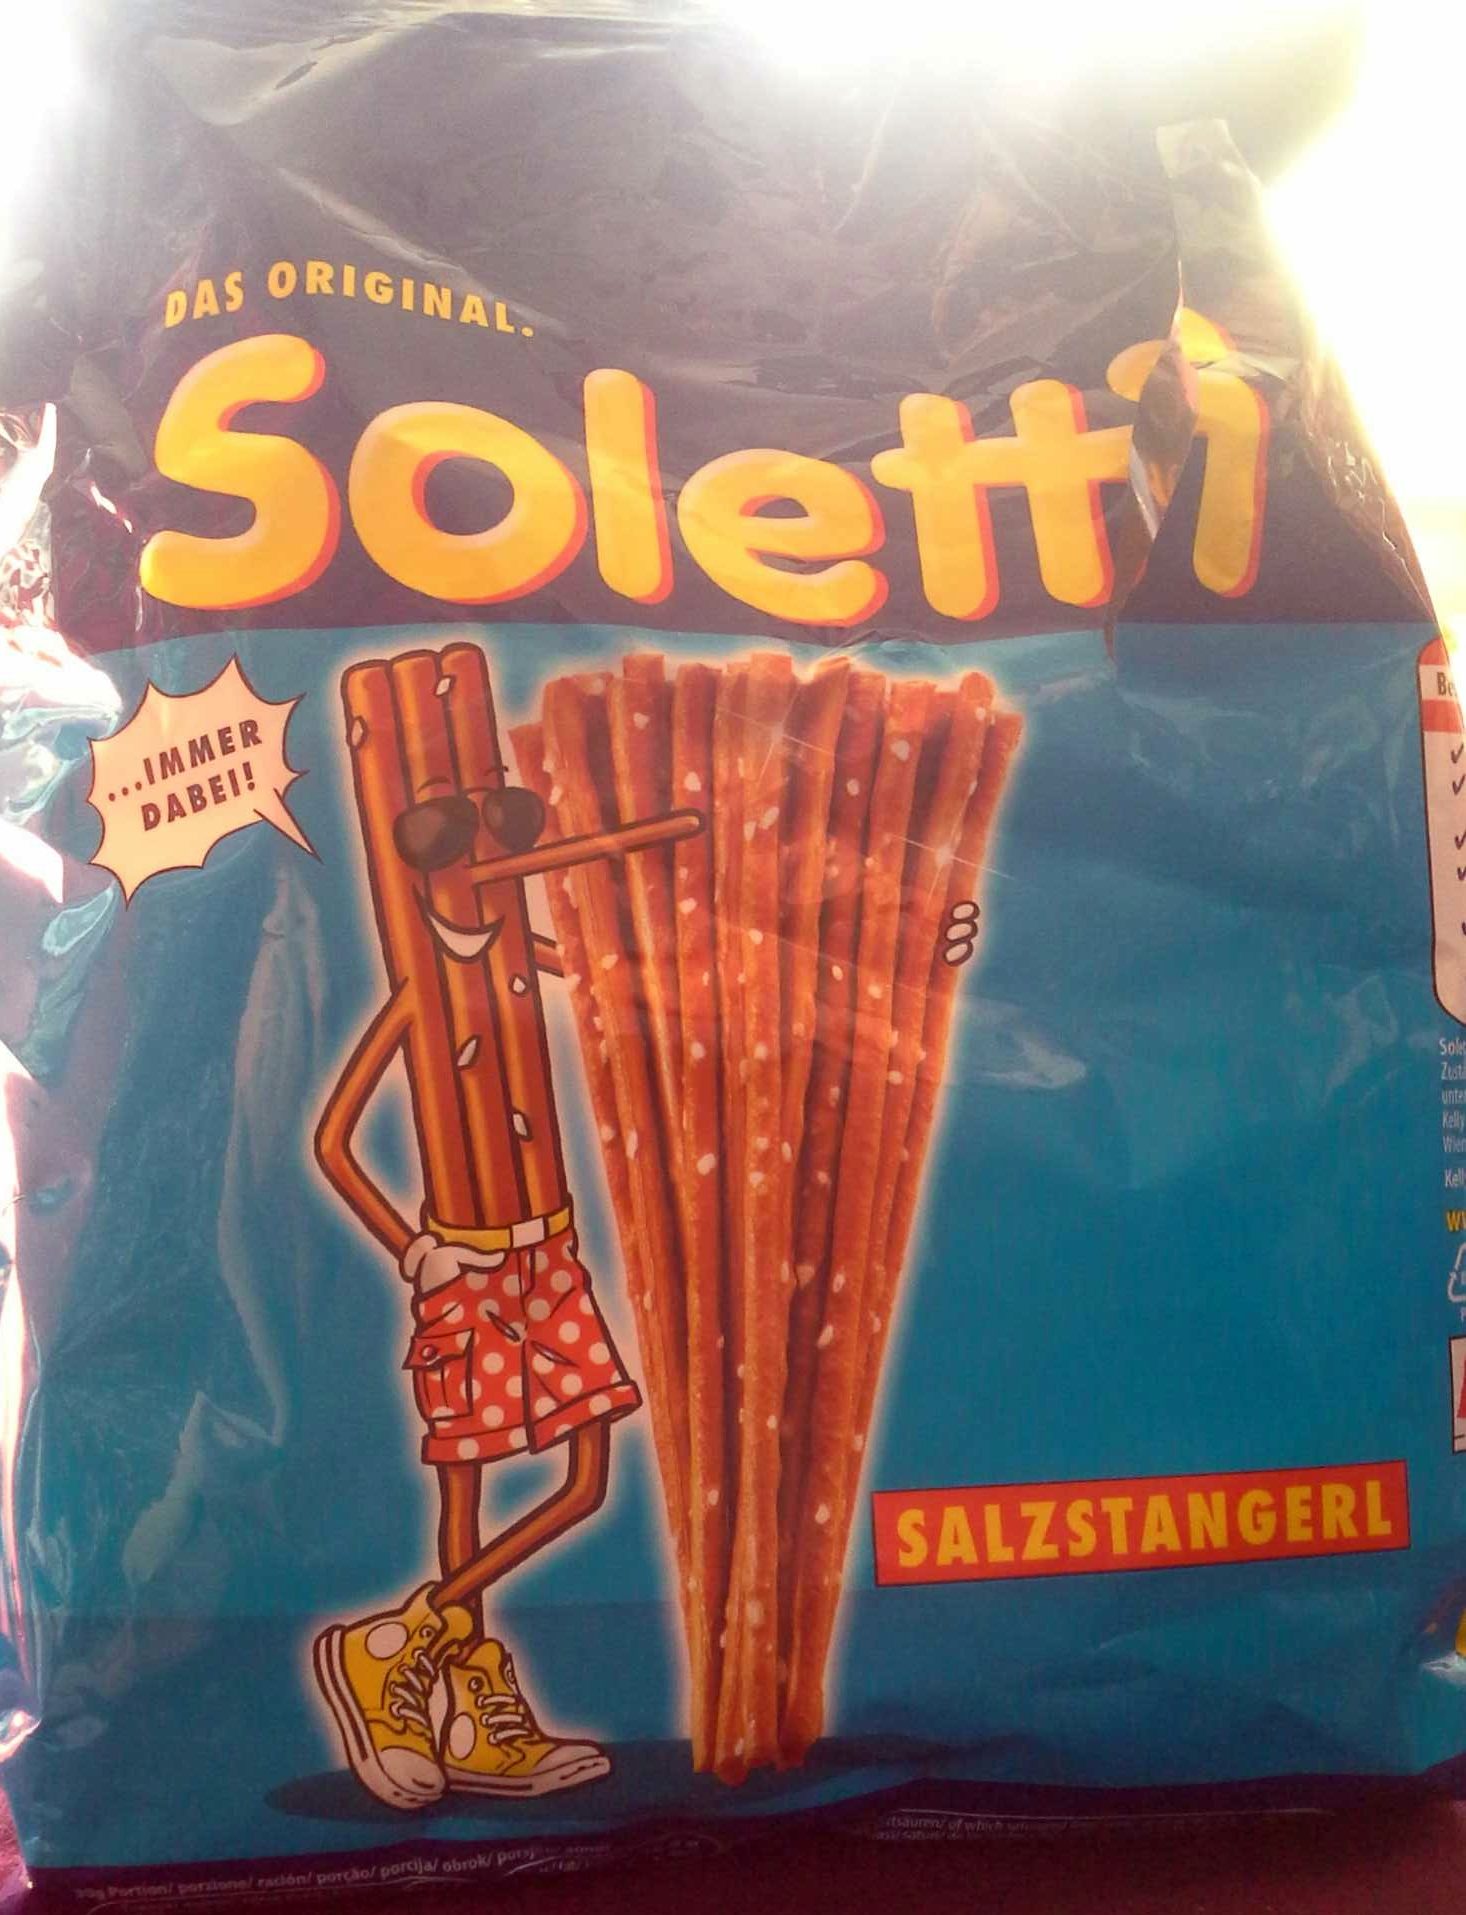 Soletti Salzstangerl - Product - de